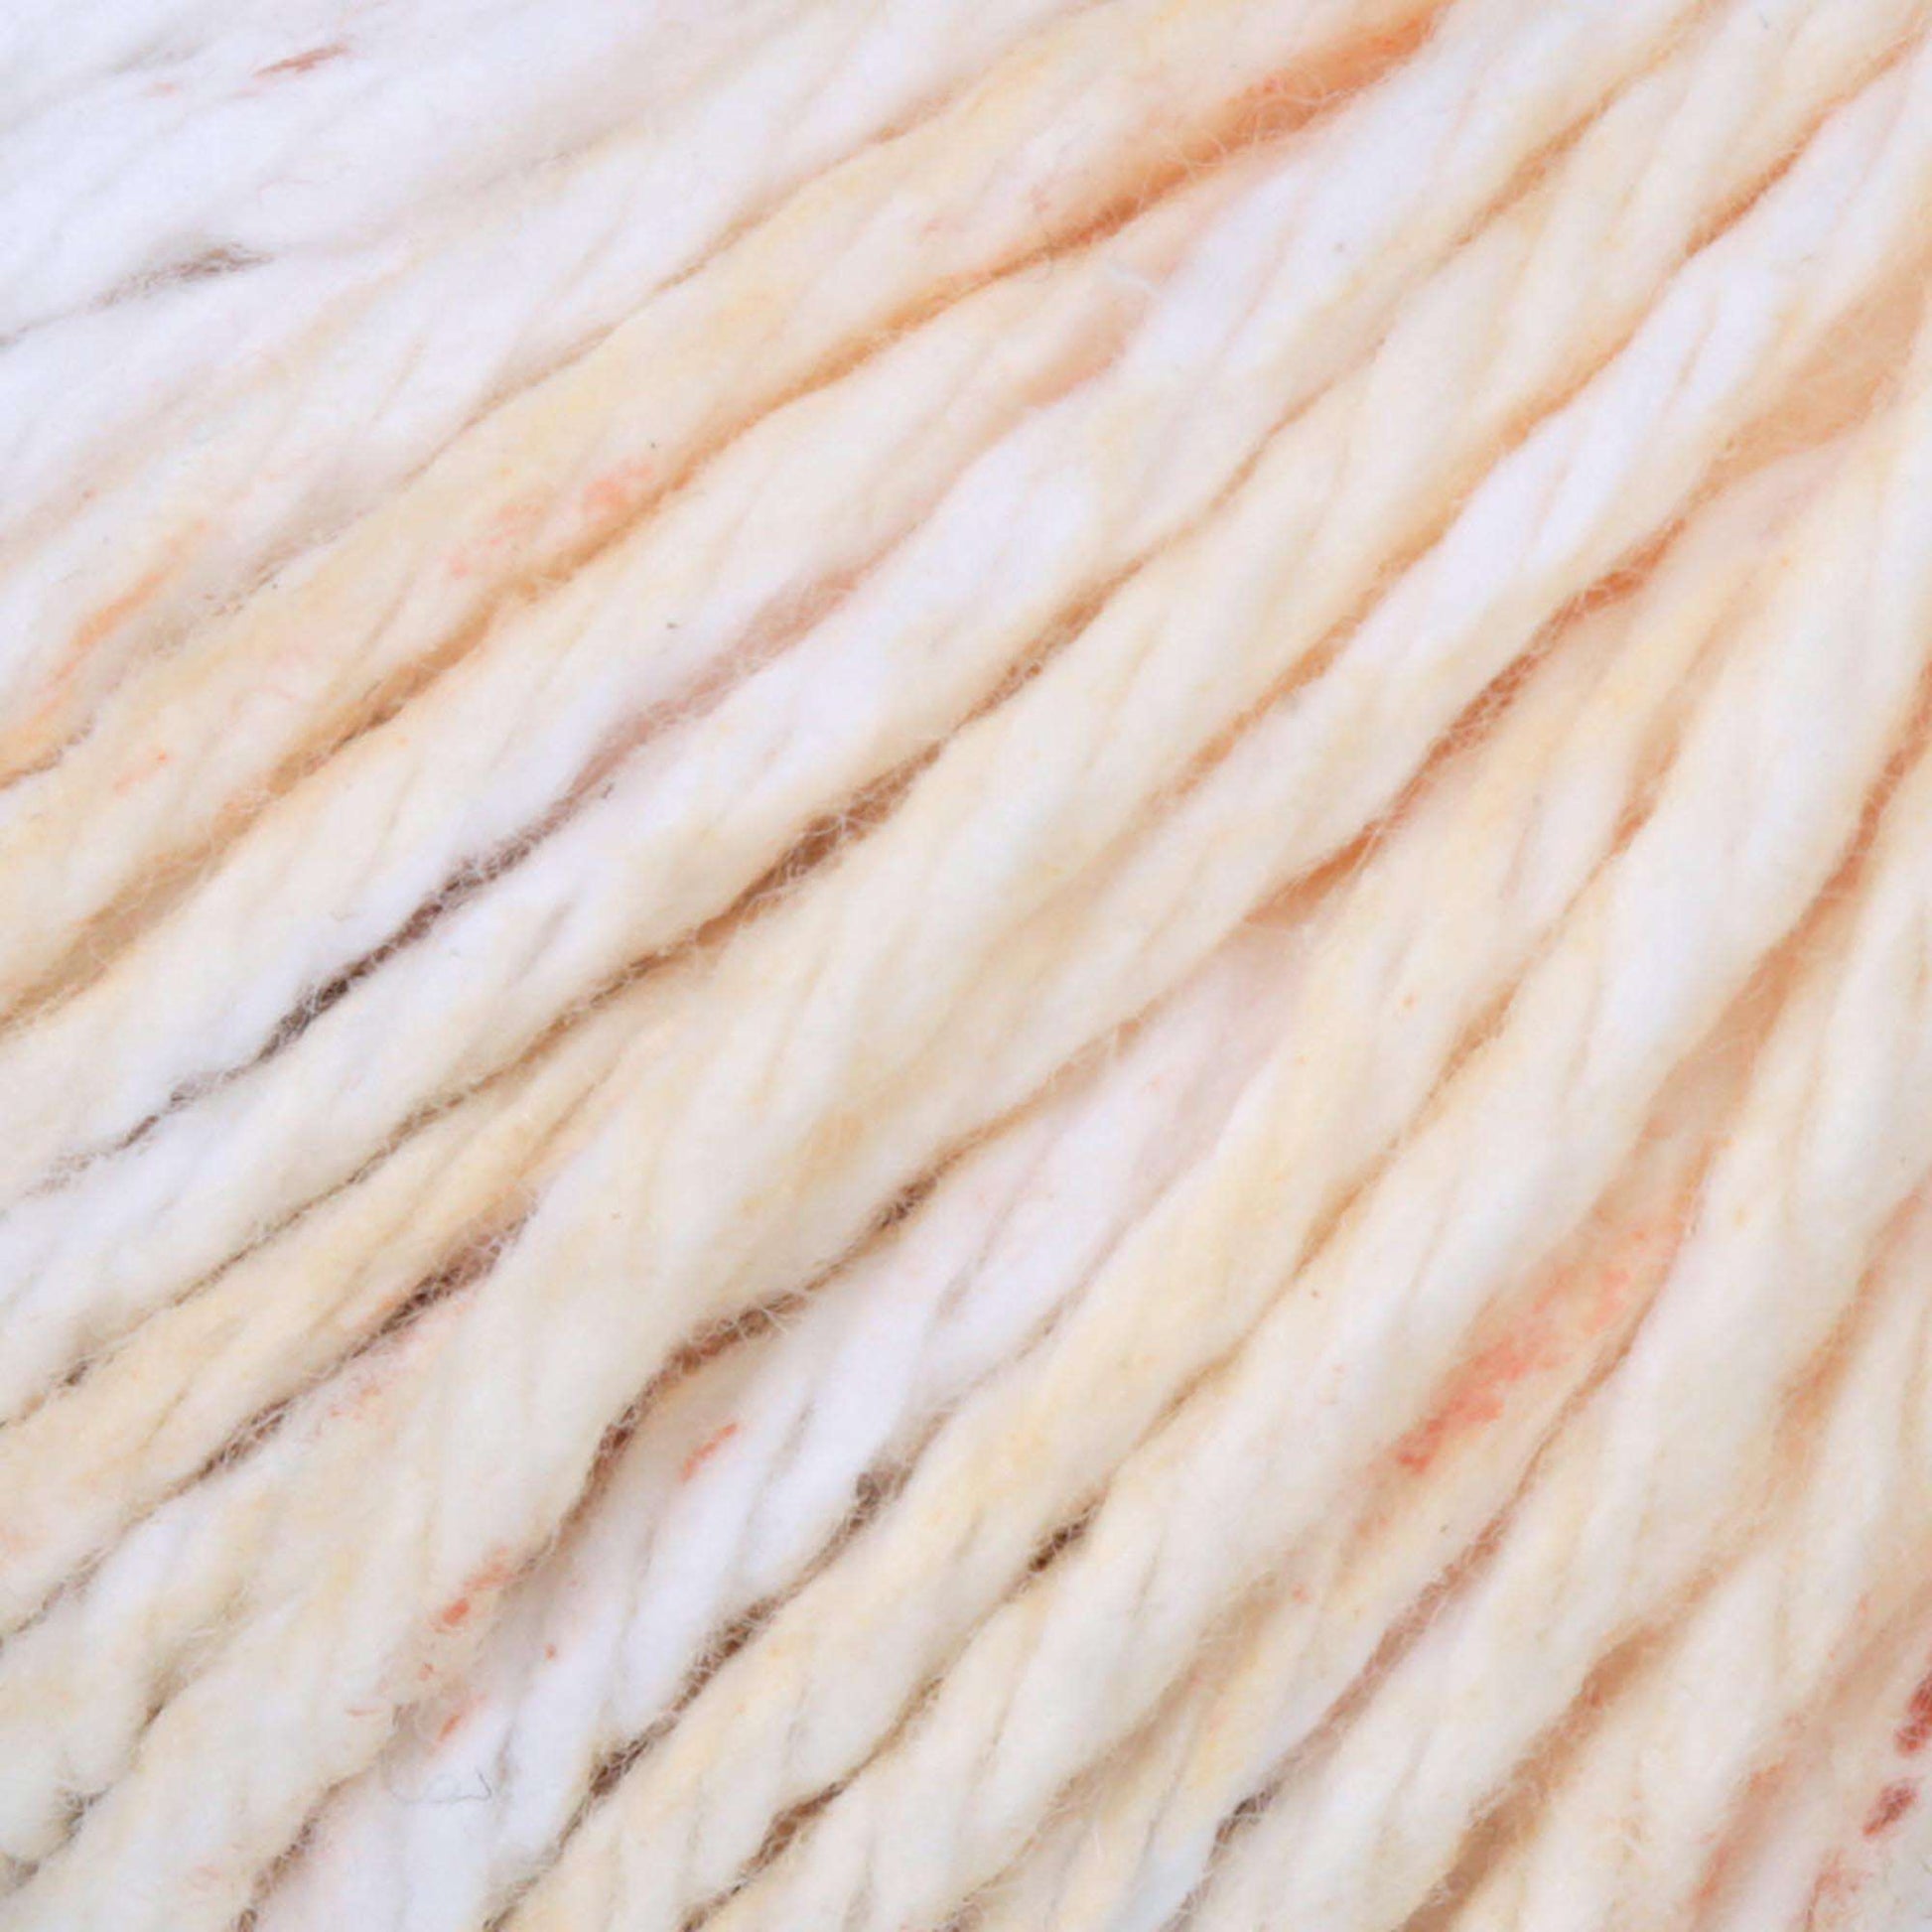 Lily Sugar'N Cream Country Stripes Yarn - 6 Pack of 57g/2oz